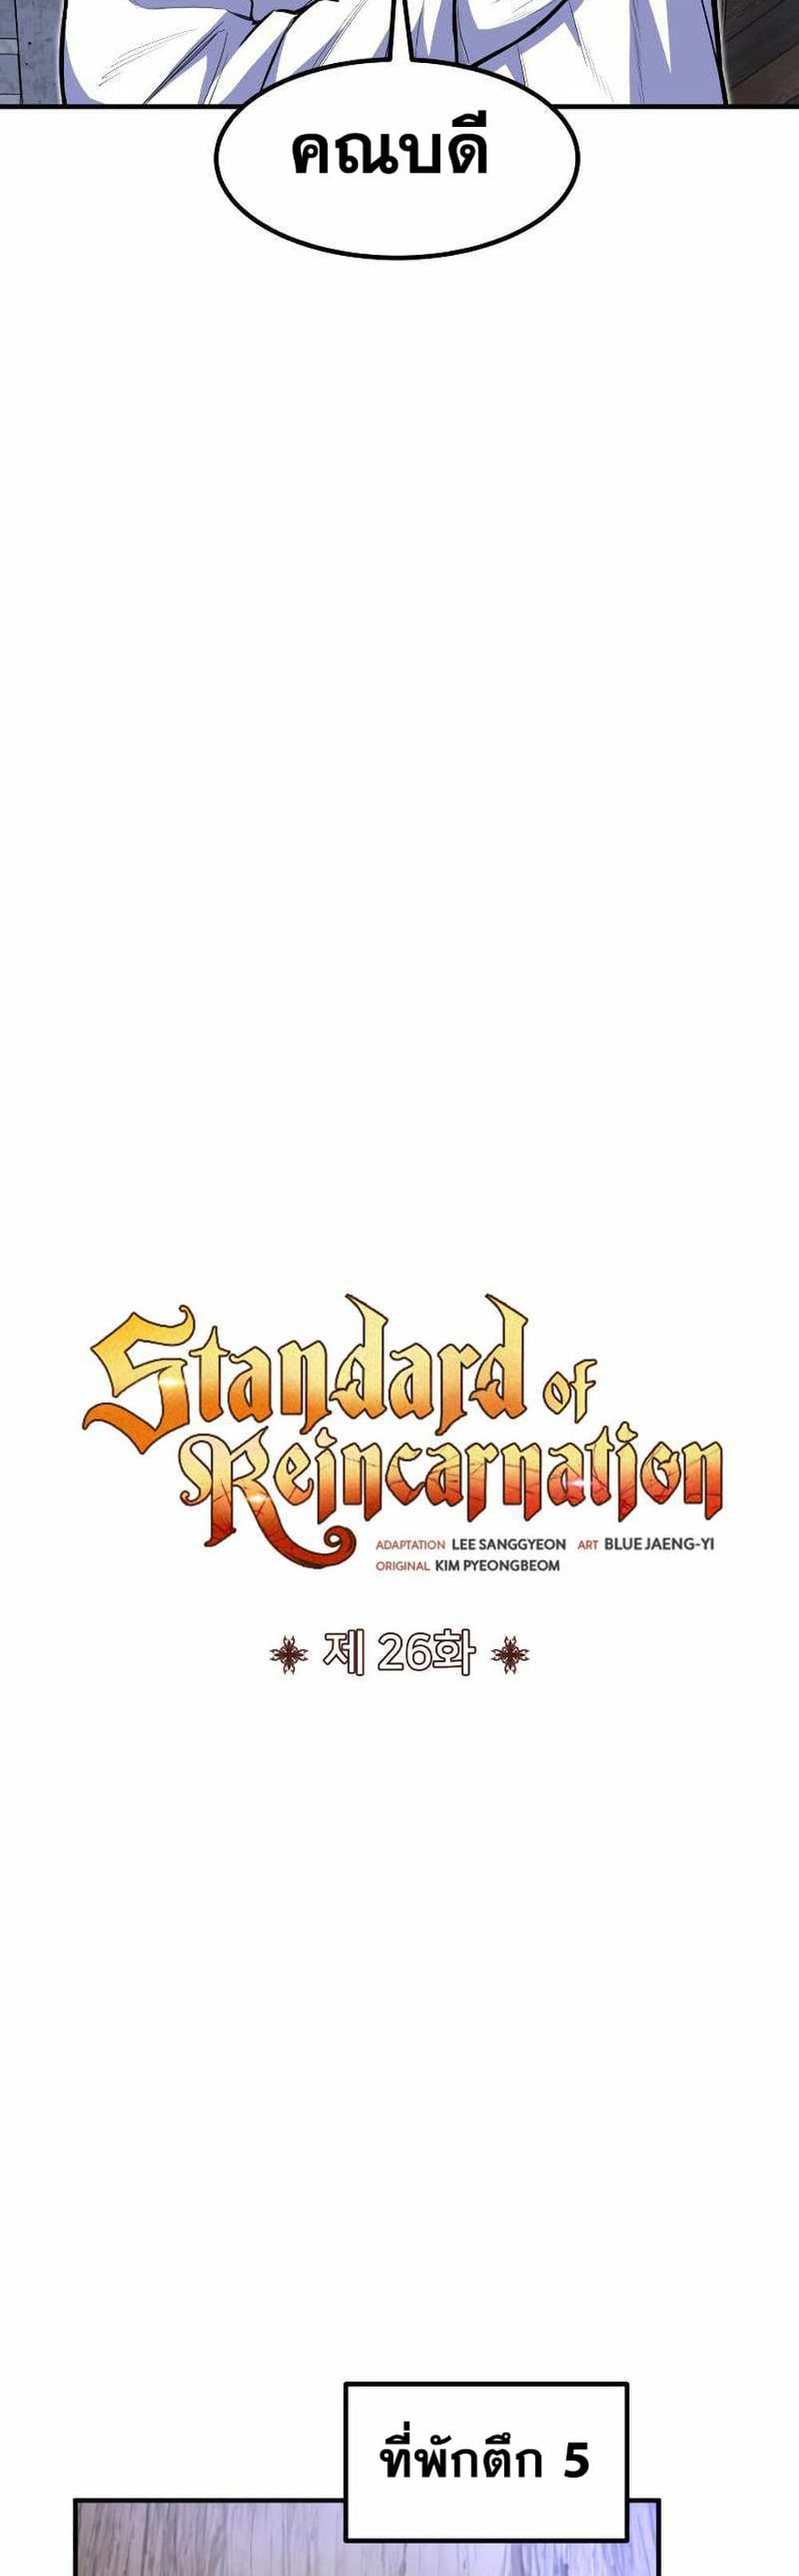 Standard of Reincarnation 26-26